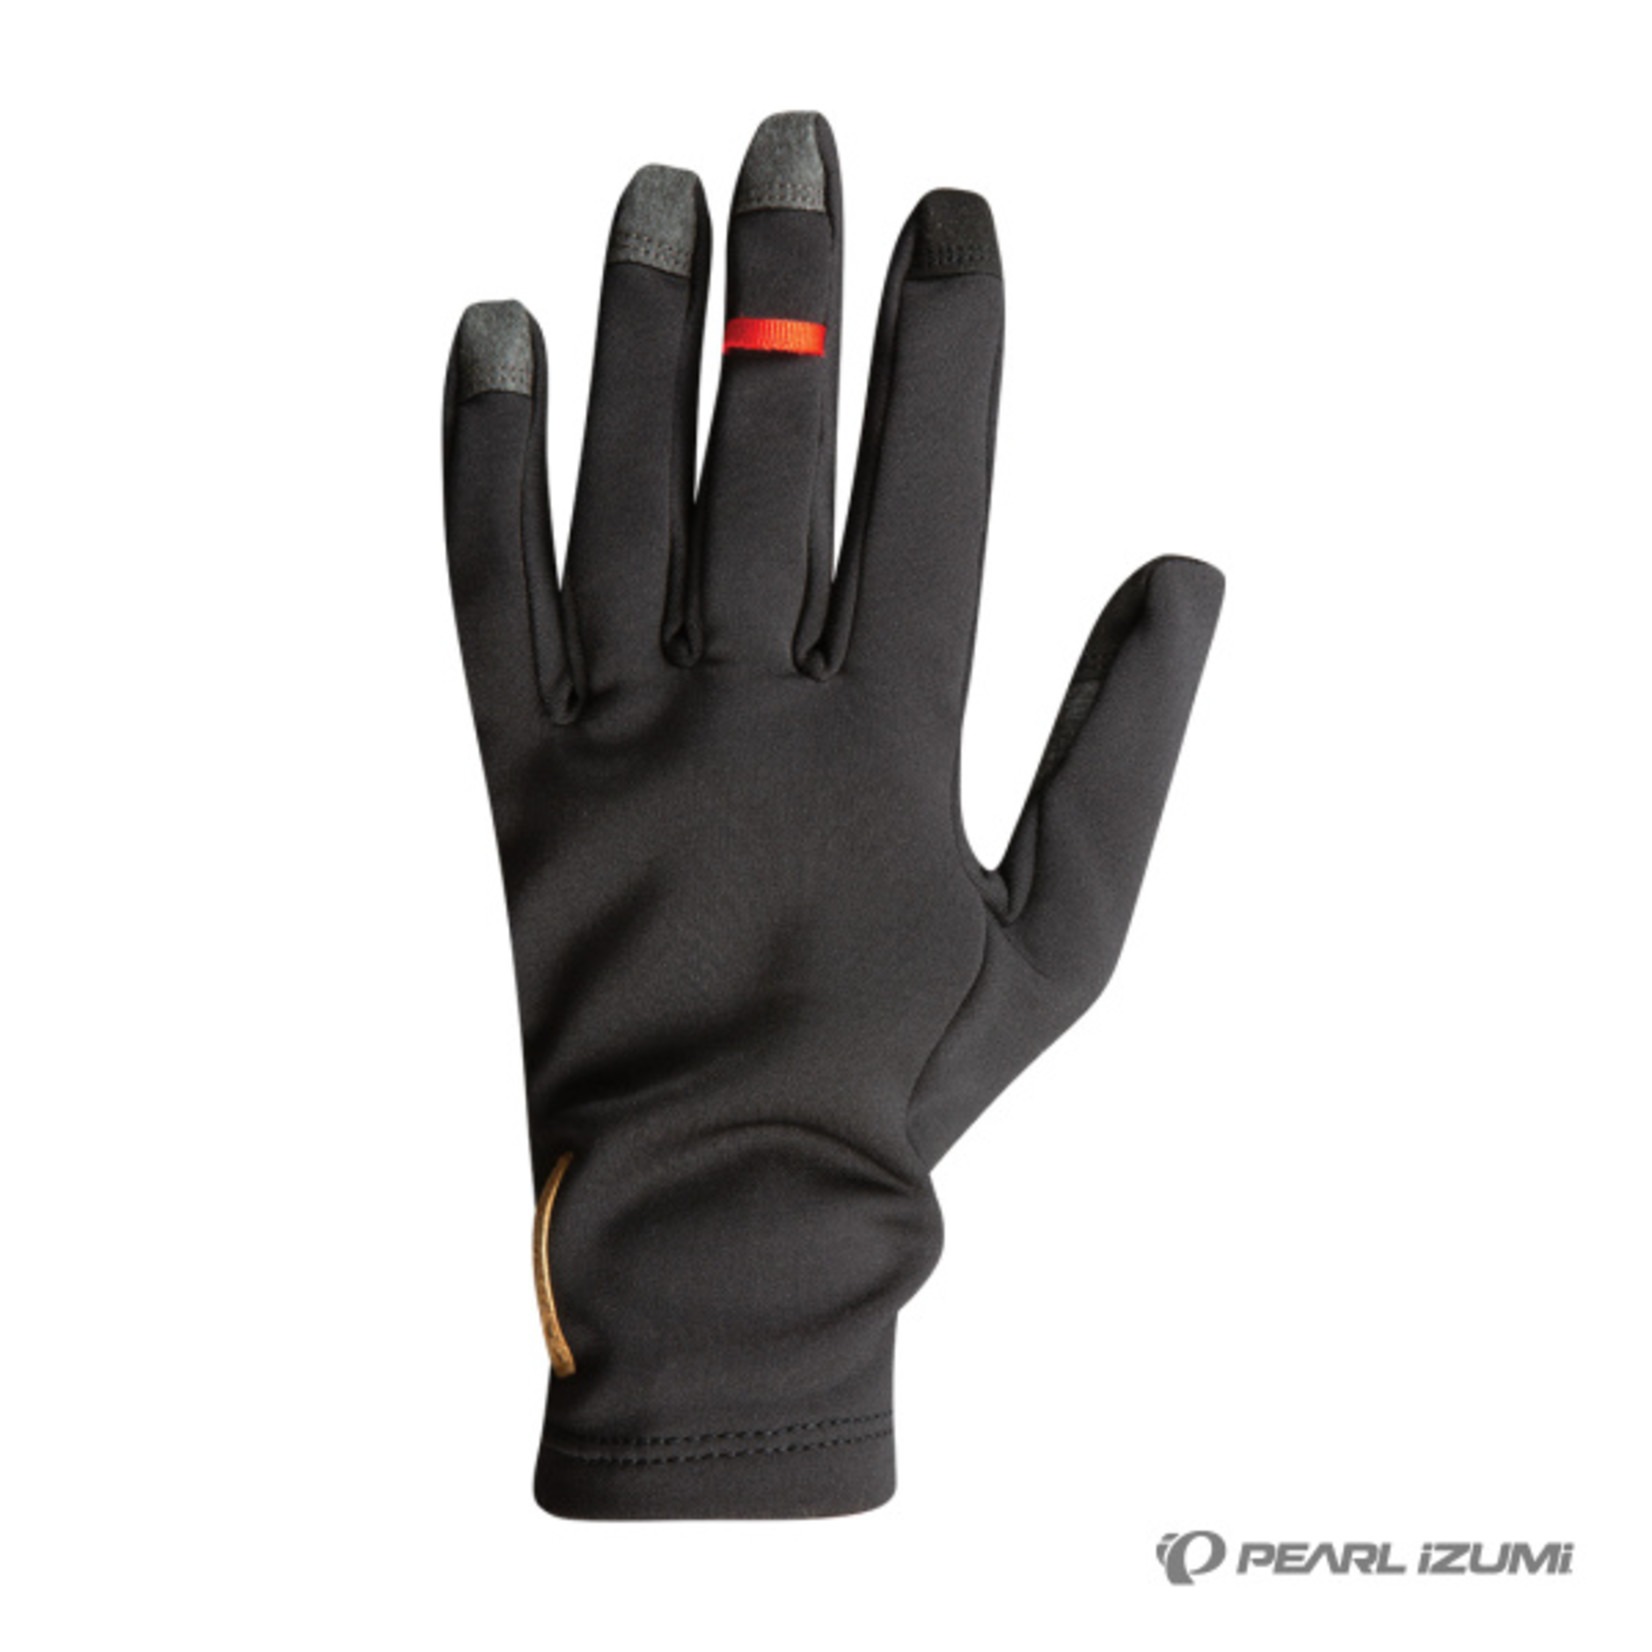 Pearl Izumi Pearl Izumi Thermal Gloves - Full Finger